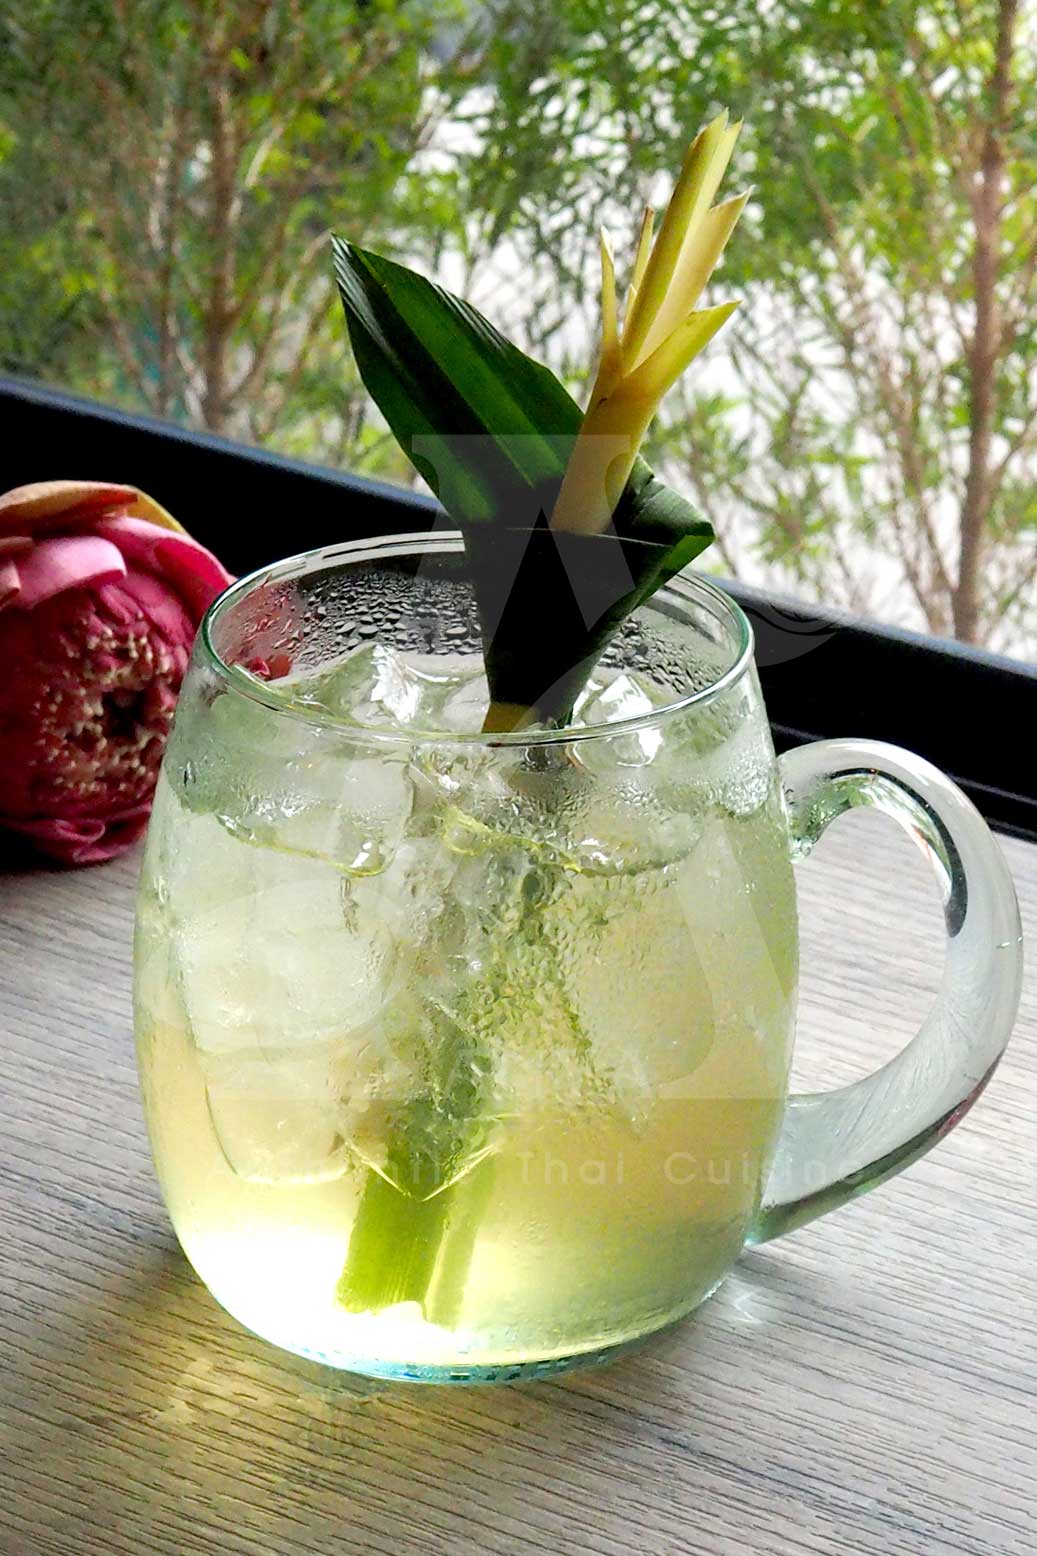 Lemon Grass and Pandan Juice